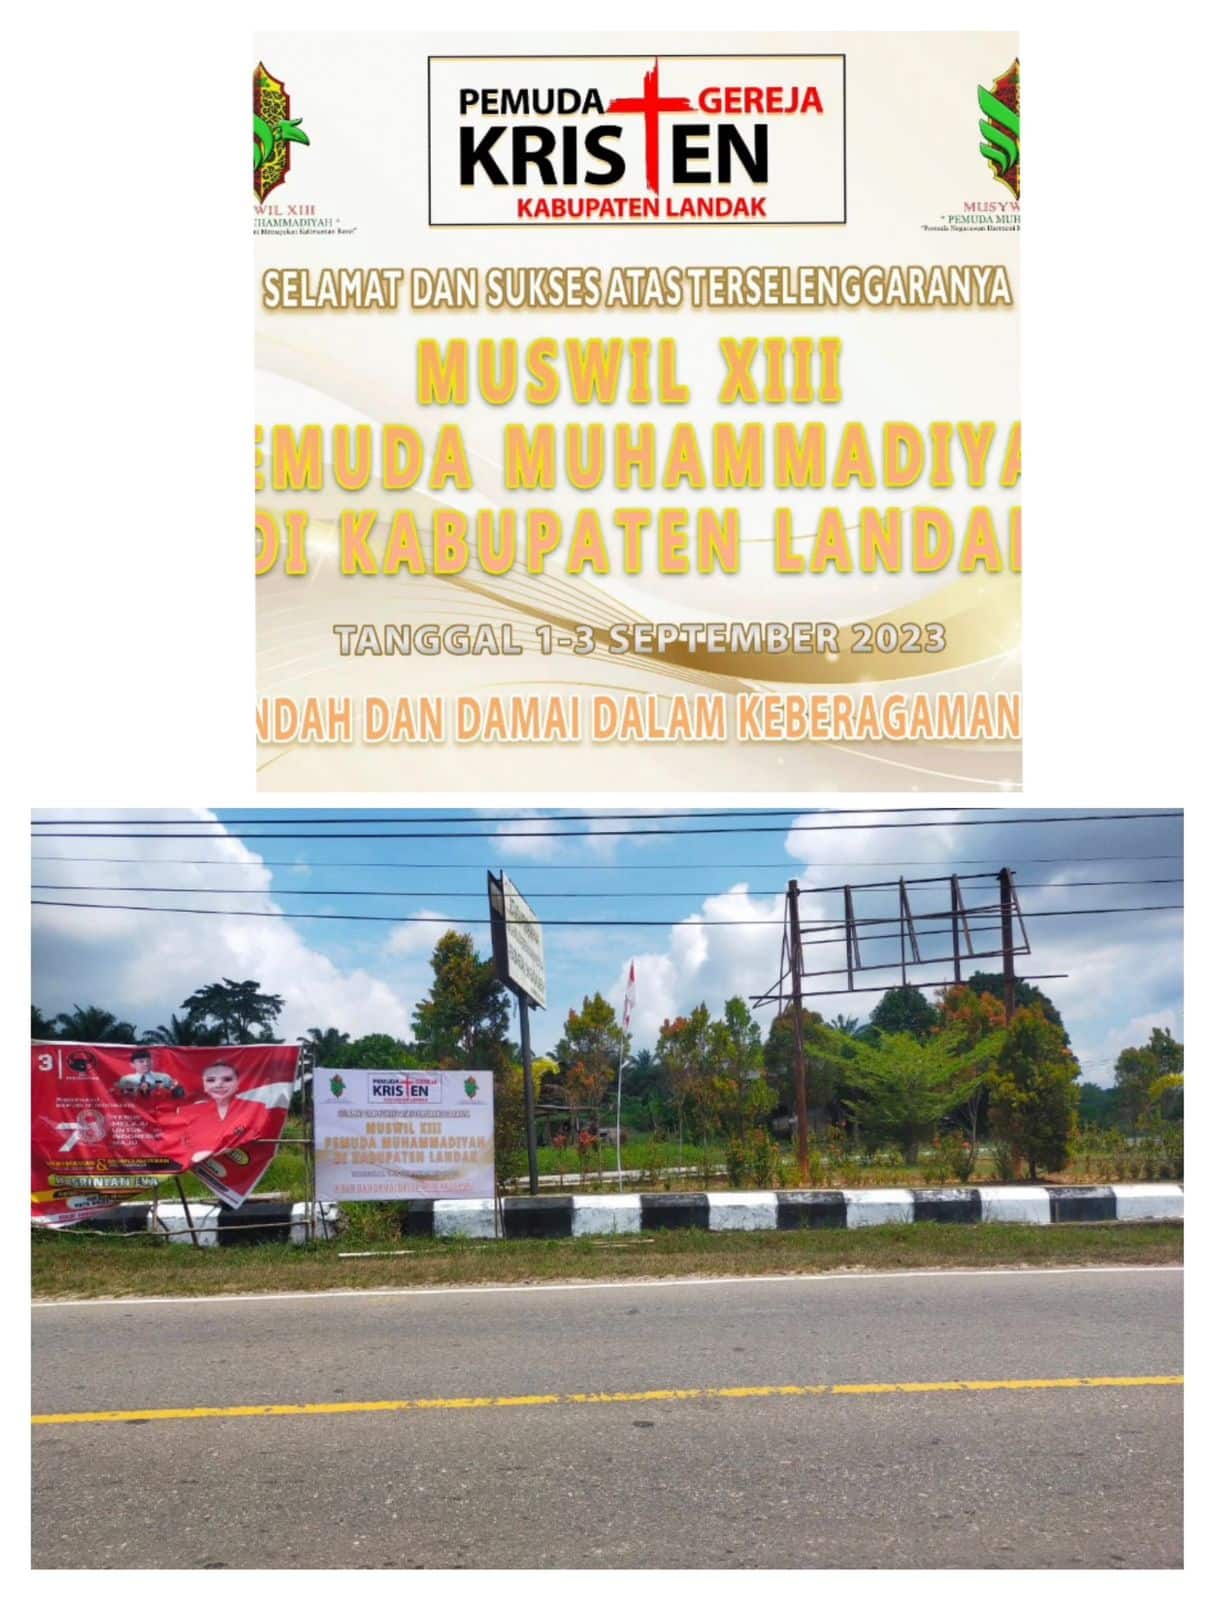 Spanduk berisikan dukungan organisasi kepemudaan kristiani terhadap pelaksanaan kegiatan Muswil XIII Pemuda Muhammadiyah di kabupaten Landak pada tanggal 1 - 3 September 2023. (Foto: Indri)